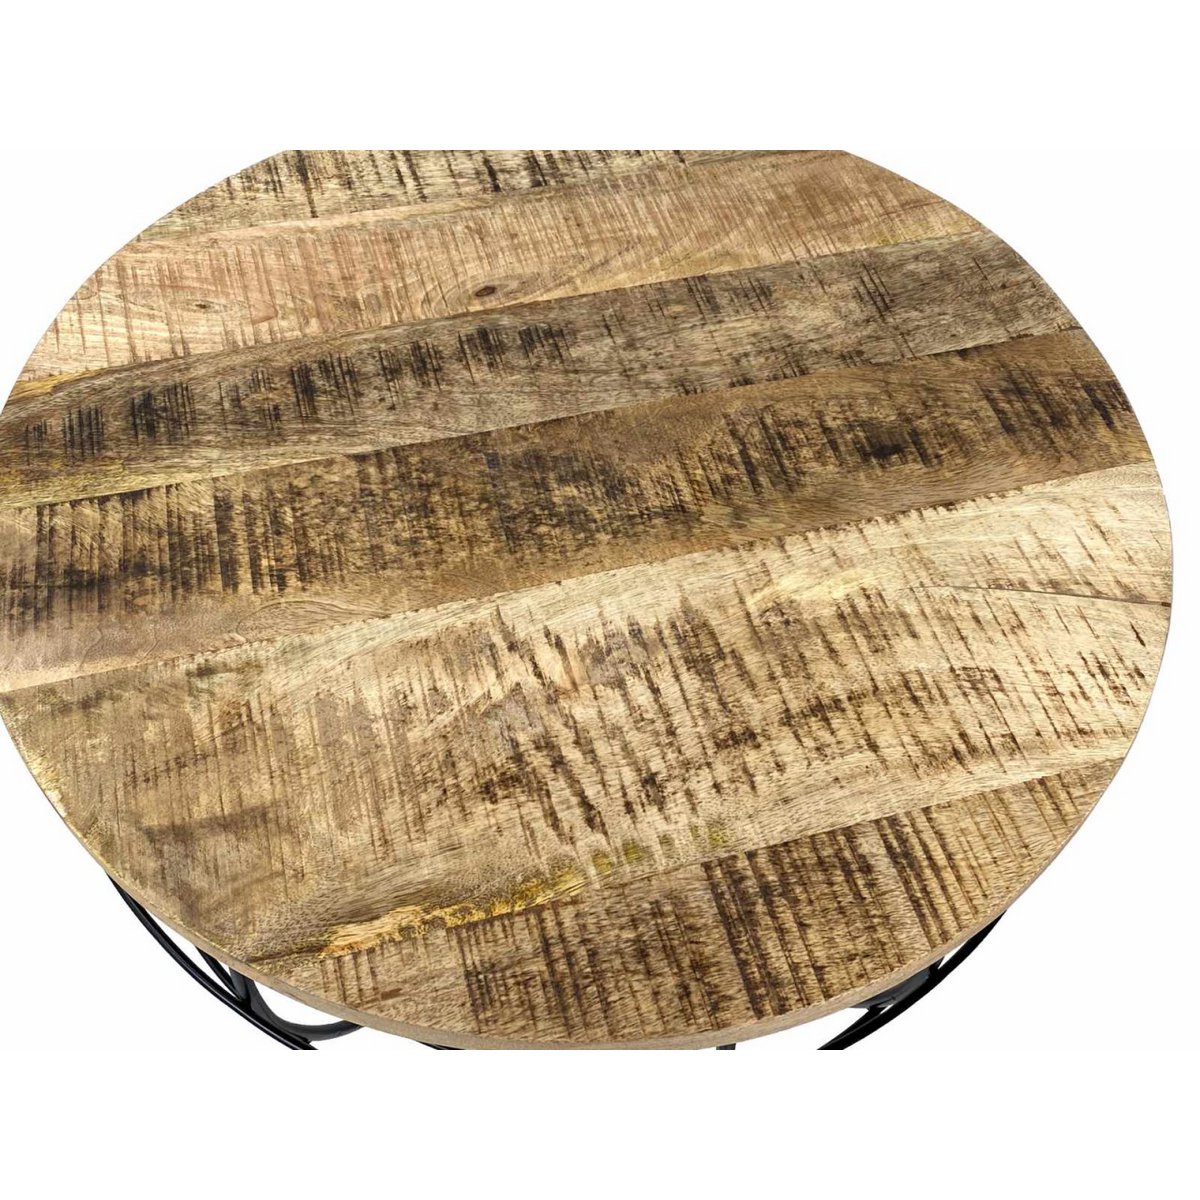 Handgemaakte salontafel met metalen roosterframe - donker oud hout